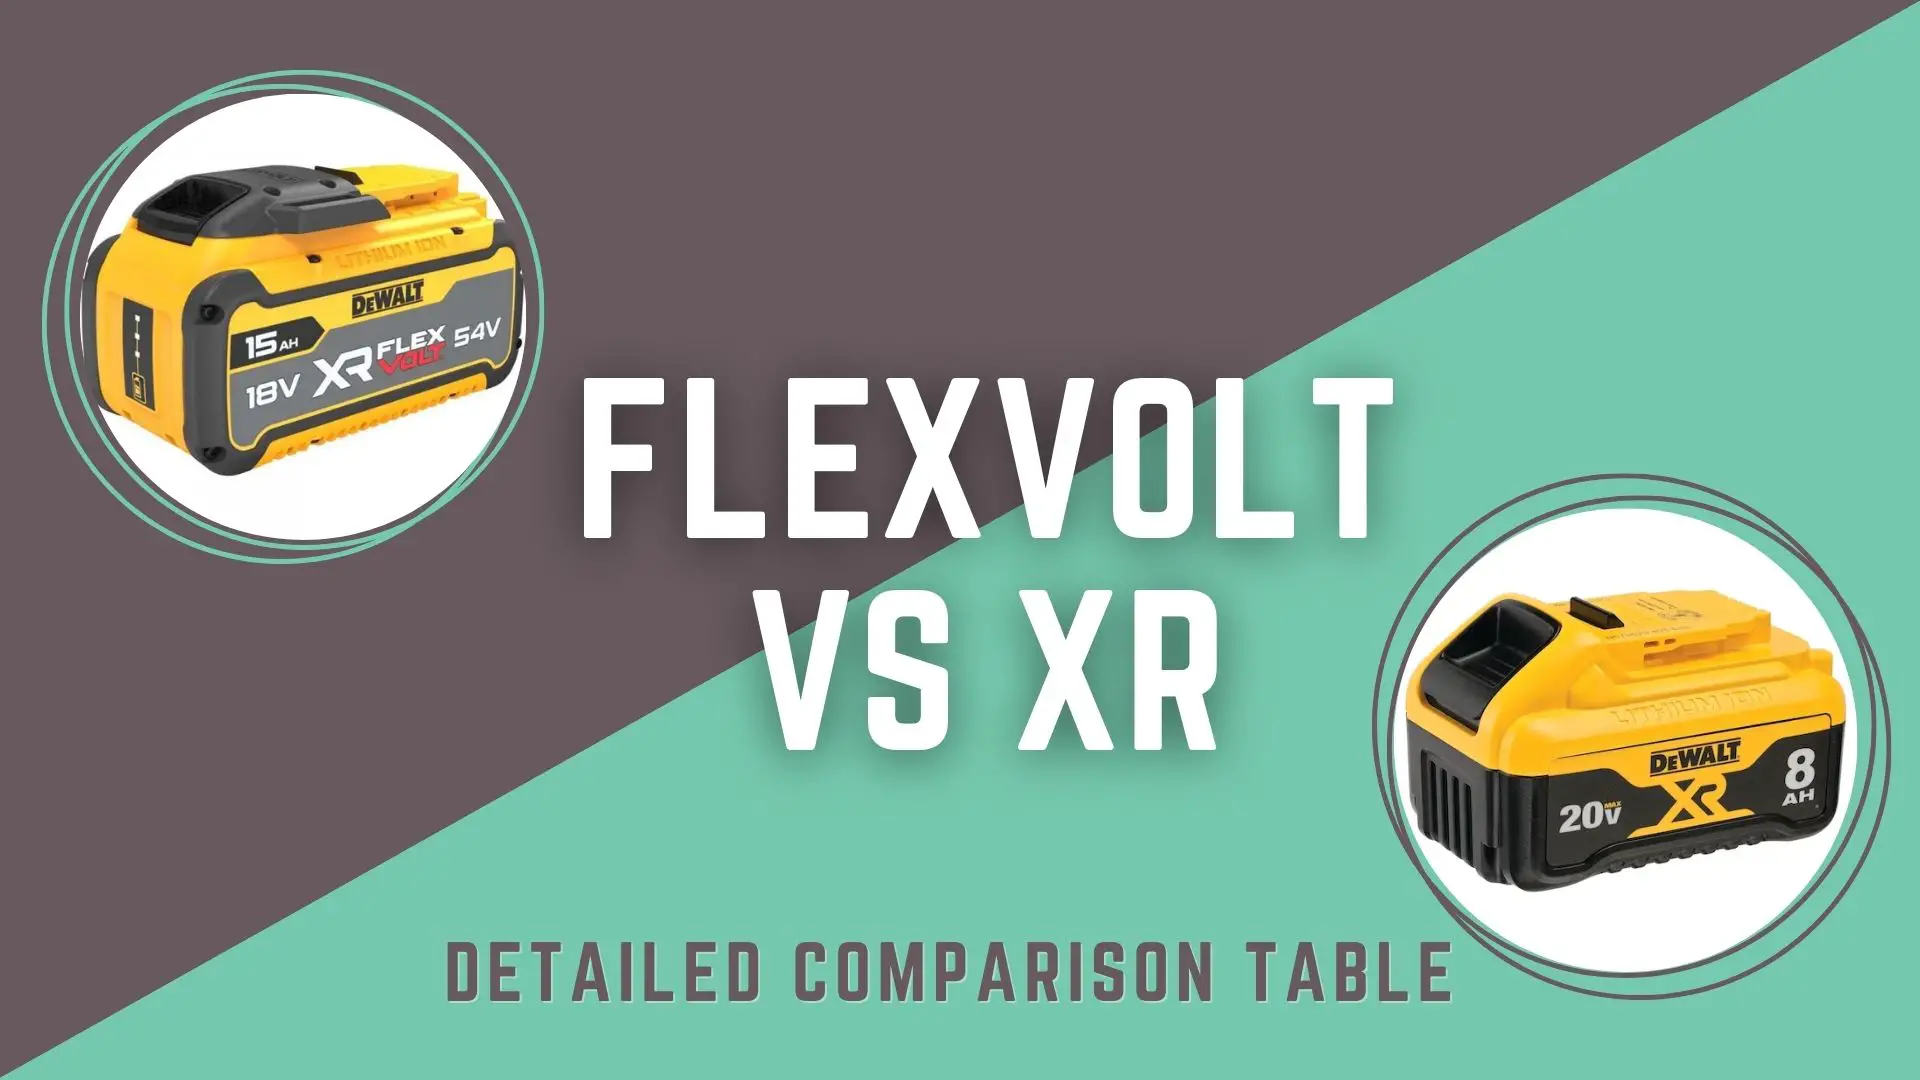 dewalt flexvolt vs xr